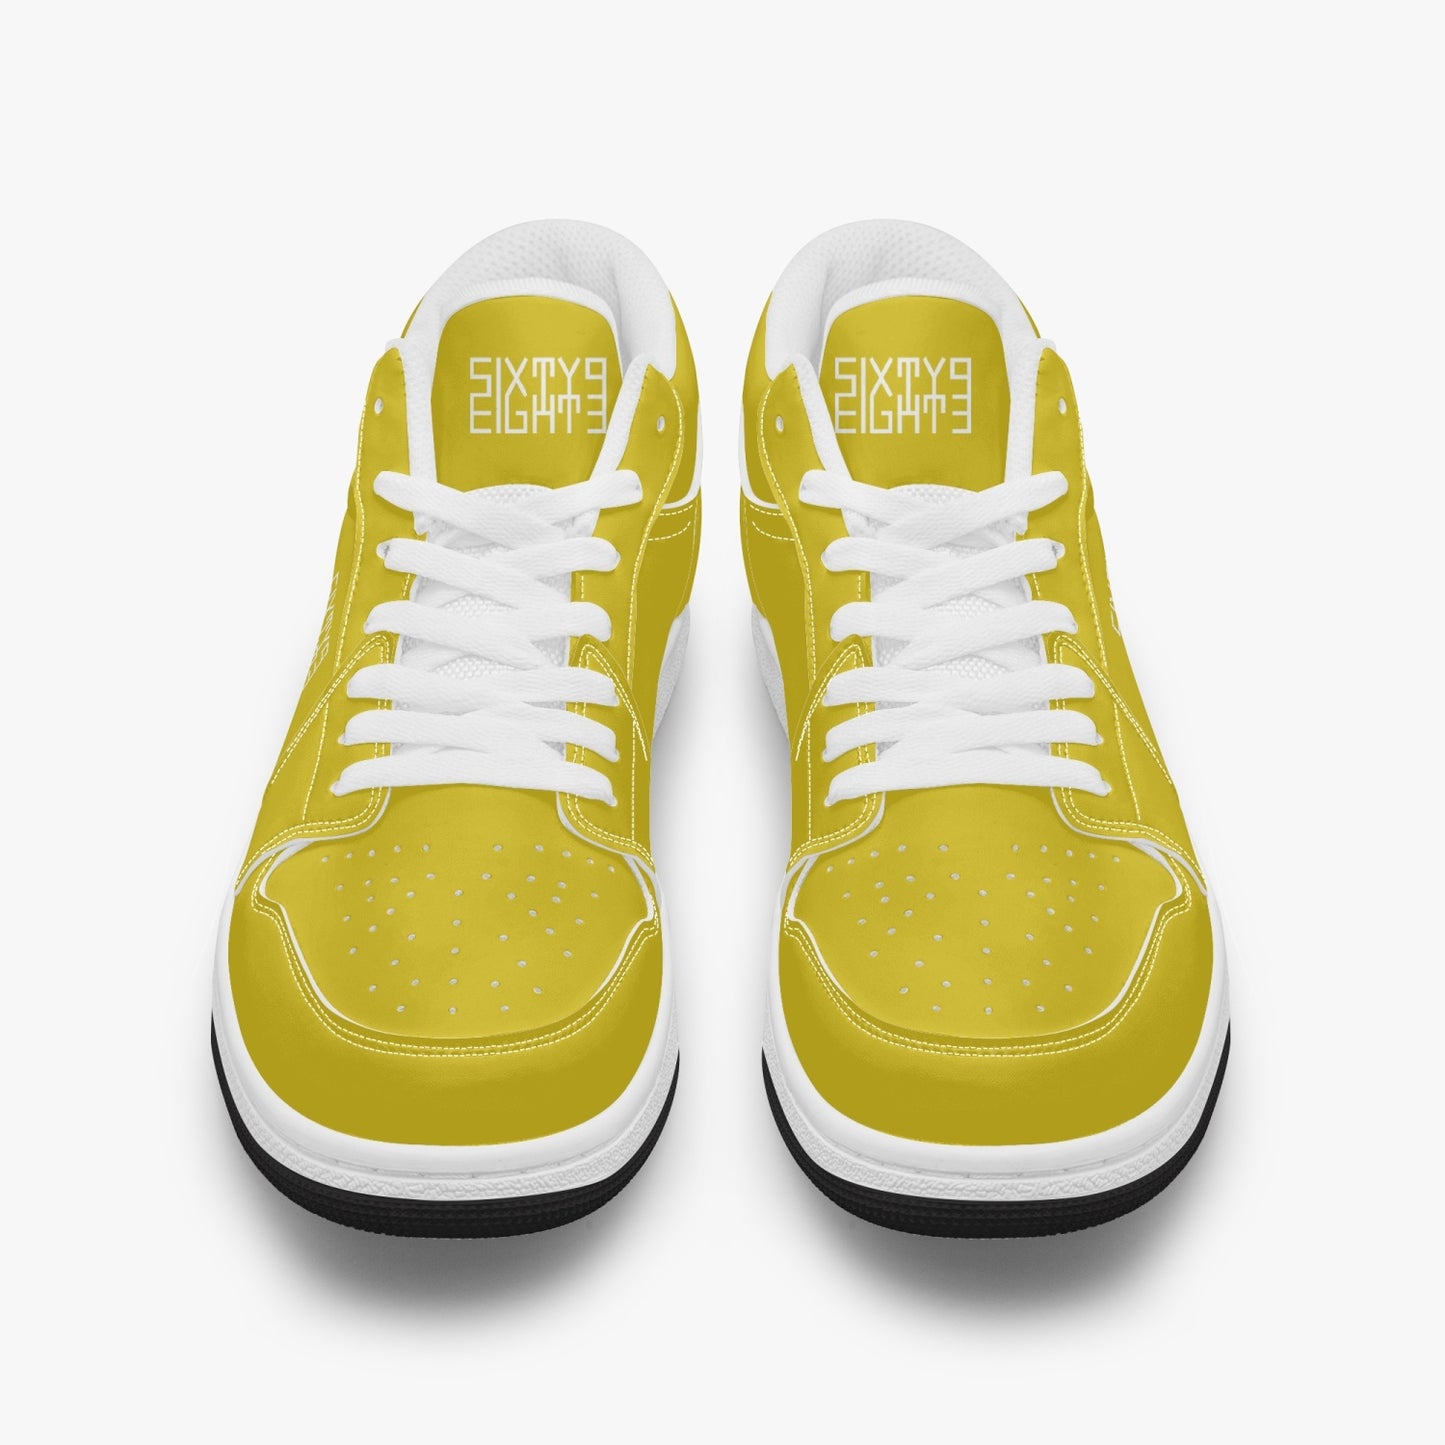 Sixty Eight 93 Logo White Gold SENTLT 1 Shoes